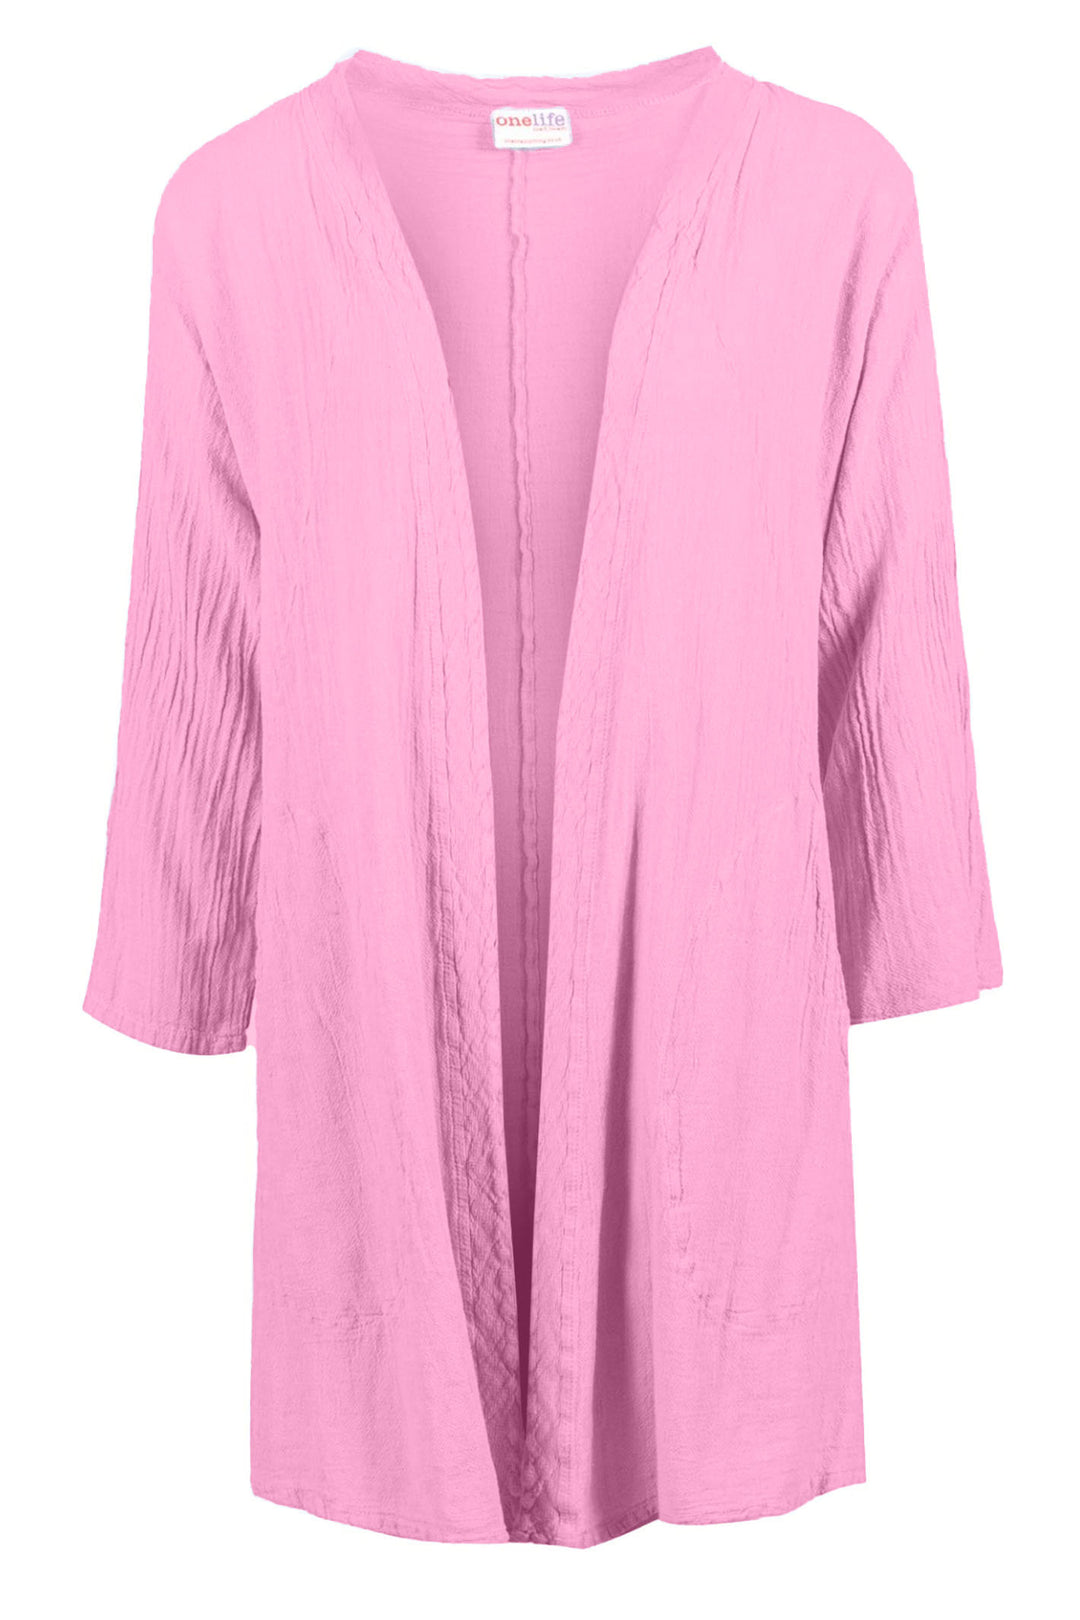 Onelife J628 Parrot Fondant Pink Cotton Kimono - Experience Boutique